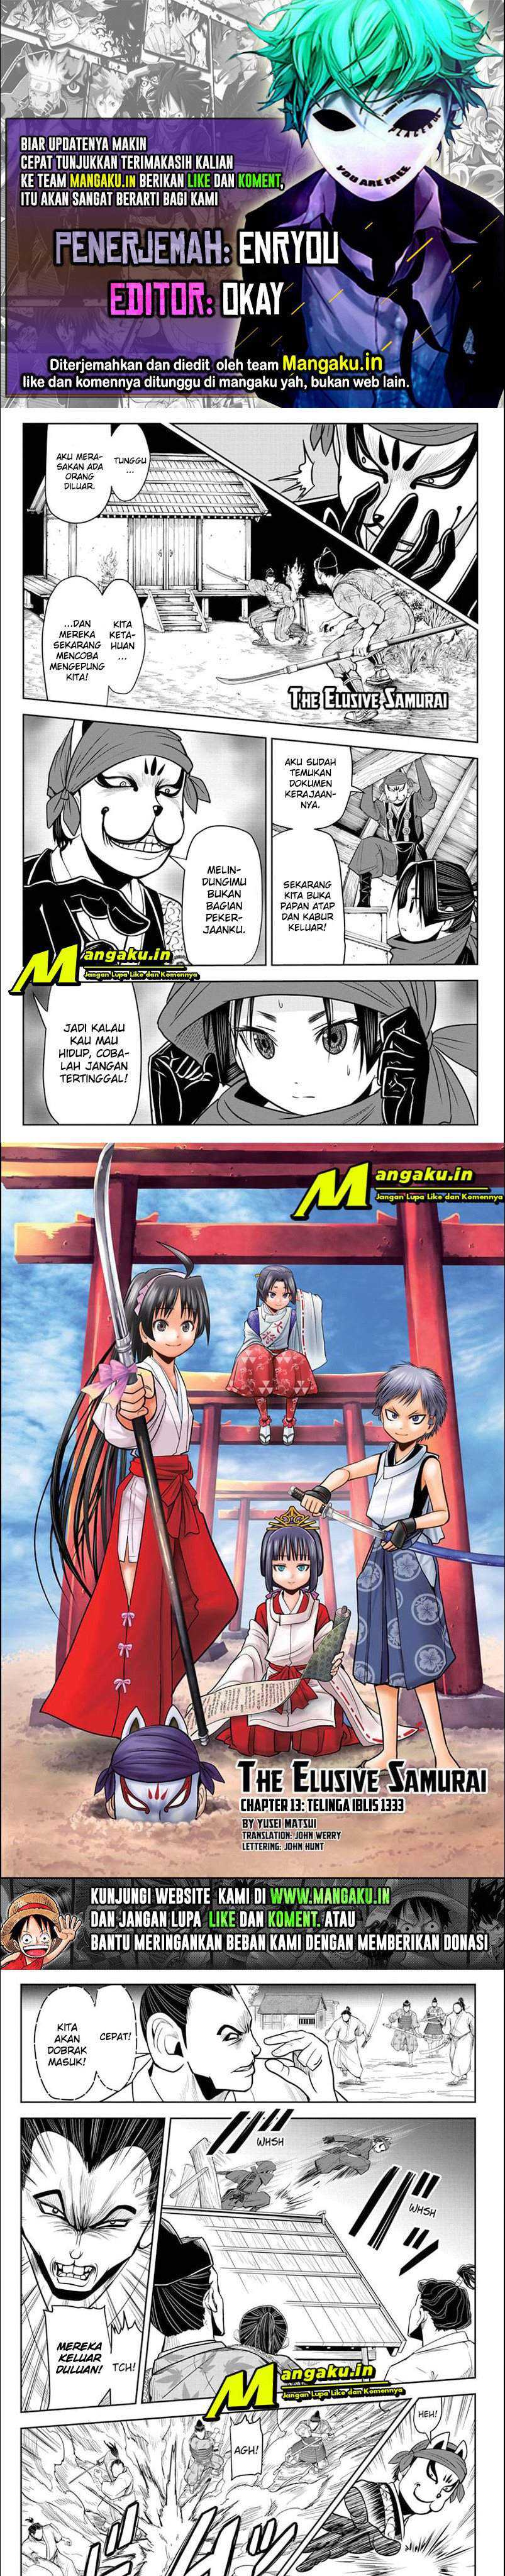 The Elusive Samurai Chapter 13 1